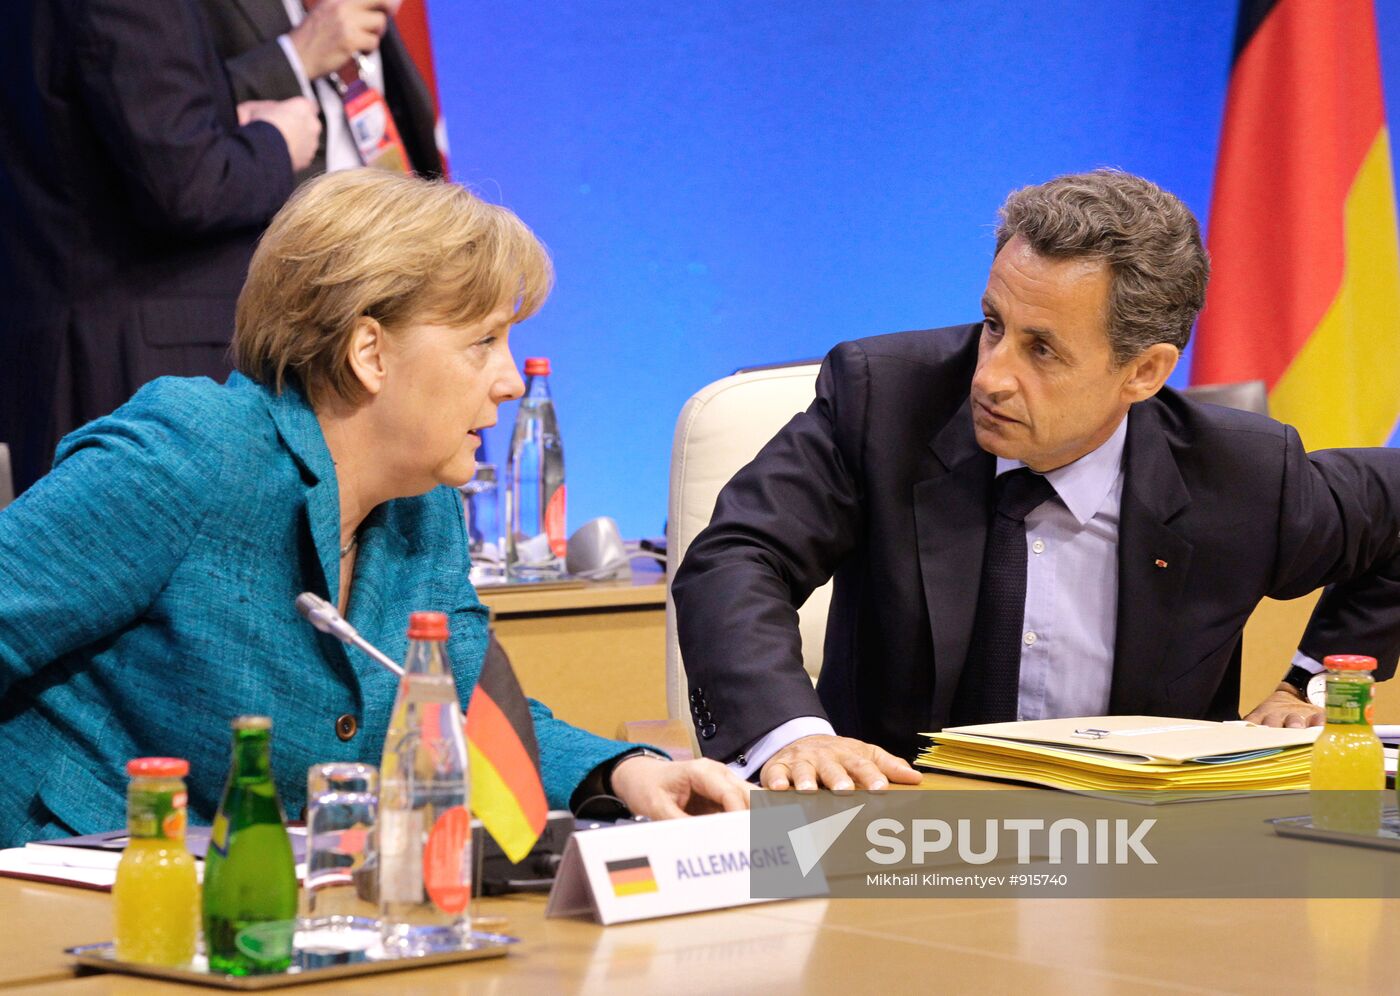 Angela Merkel, Nicolas Sarkozy